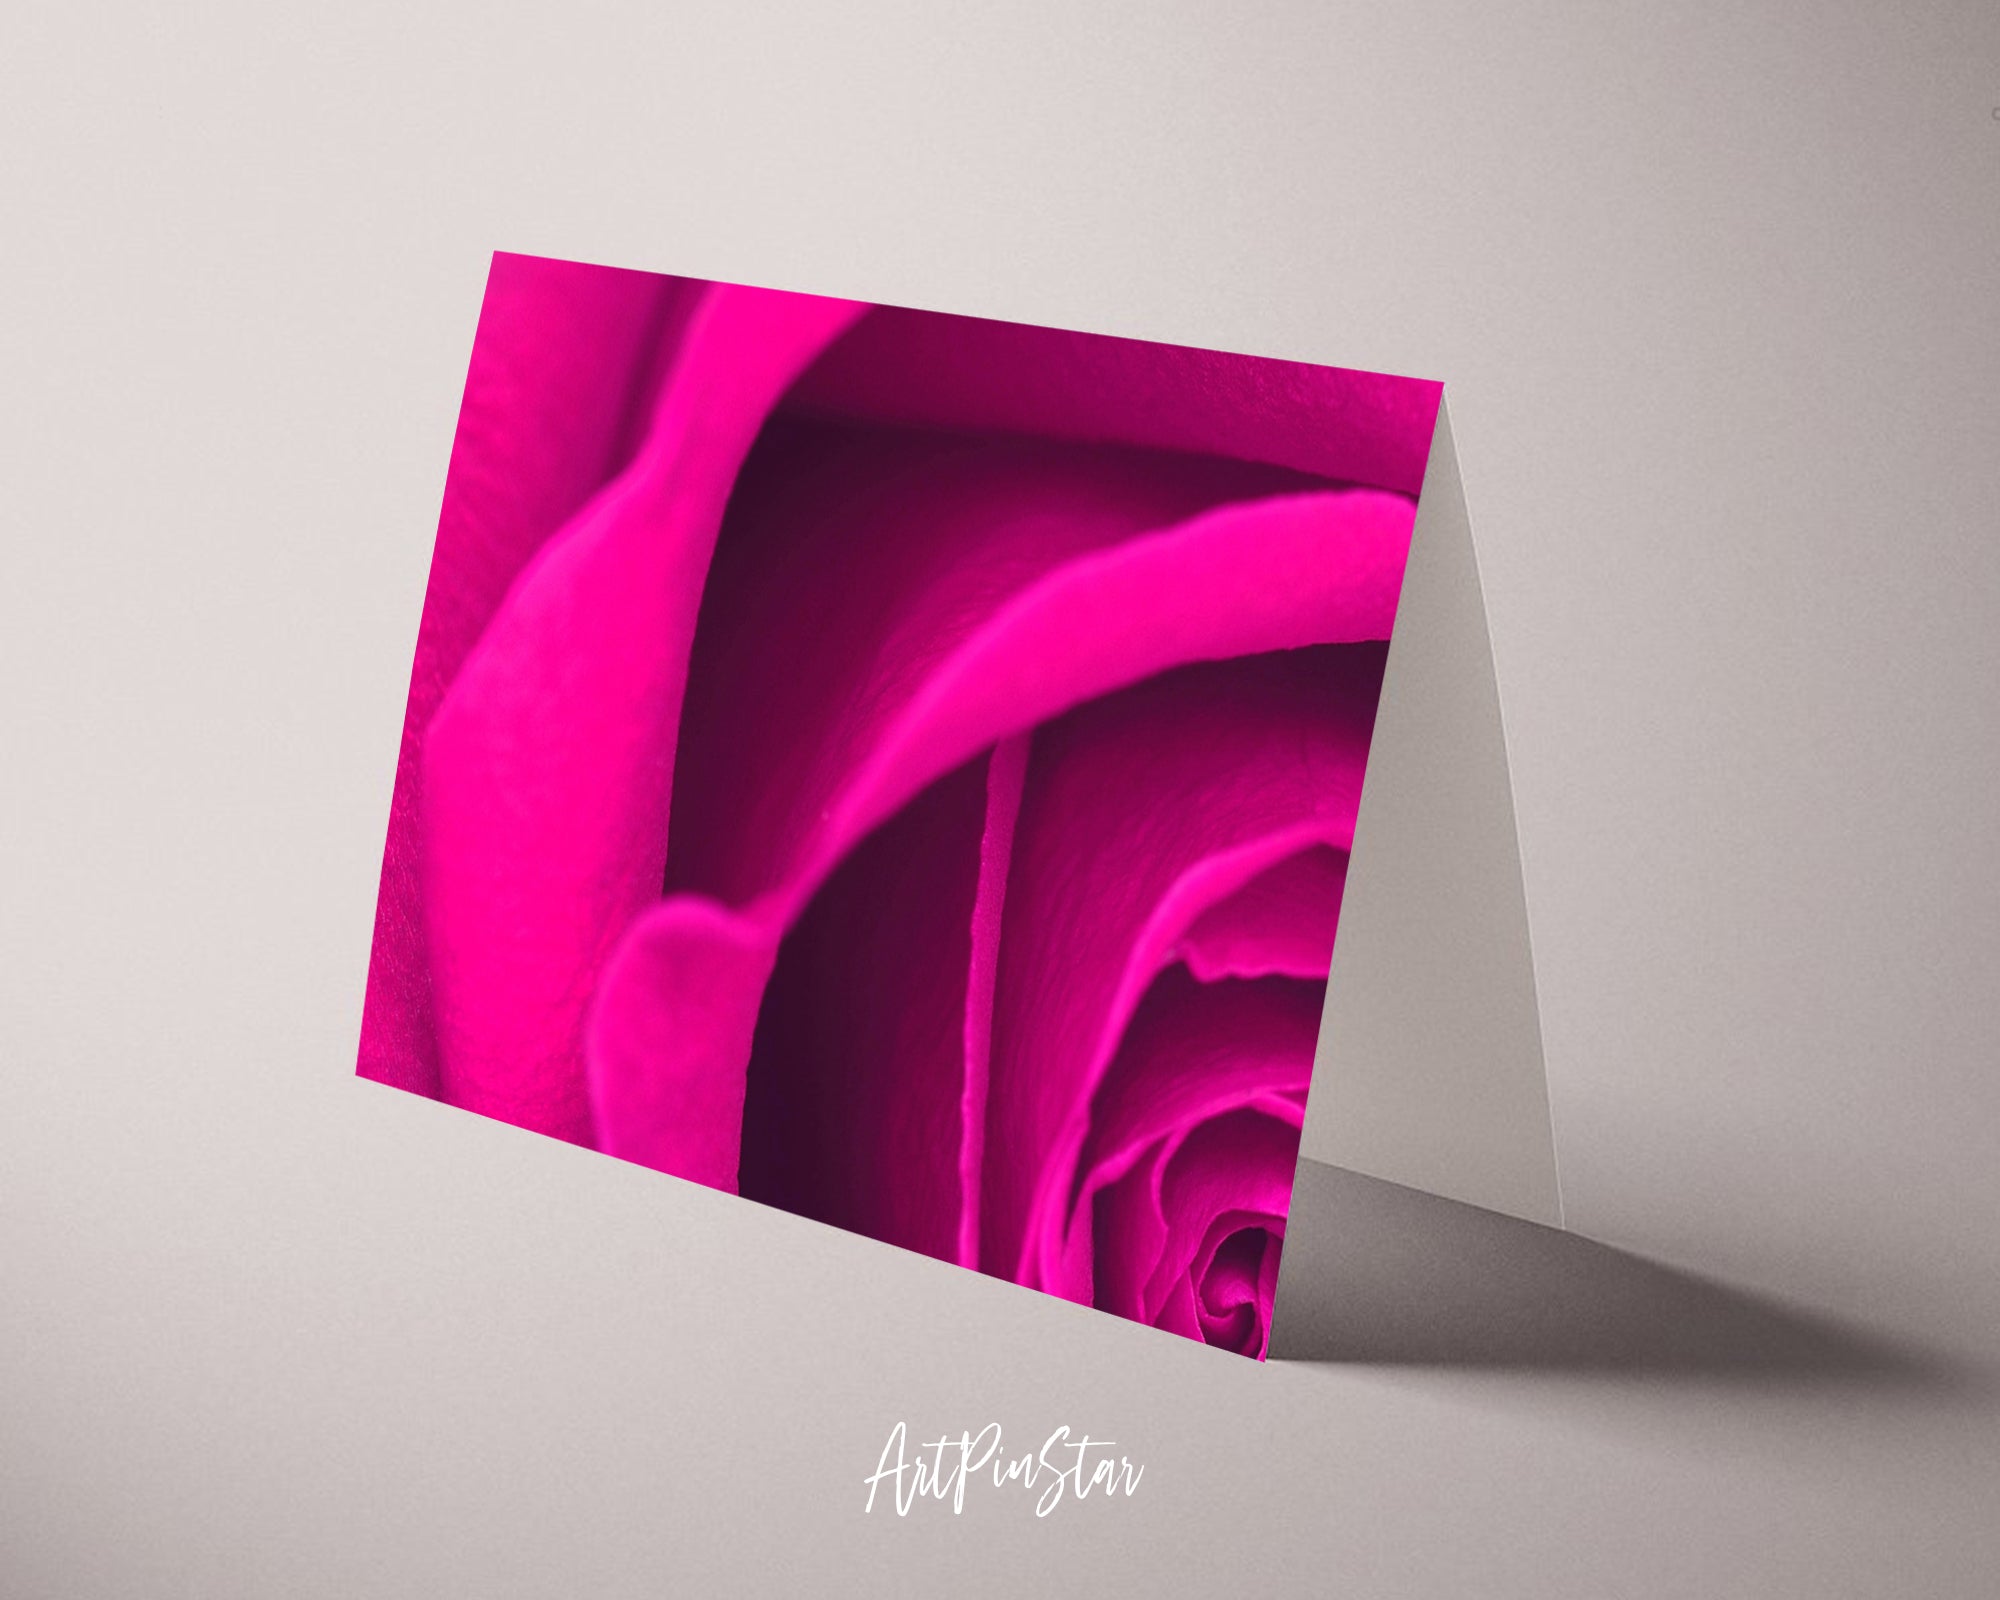 Rose Flower Photo Art Customized Gift Cards